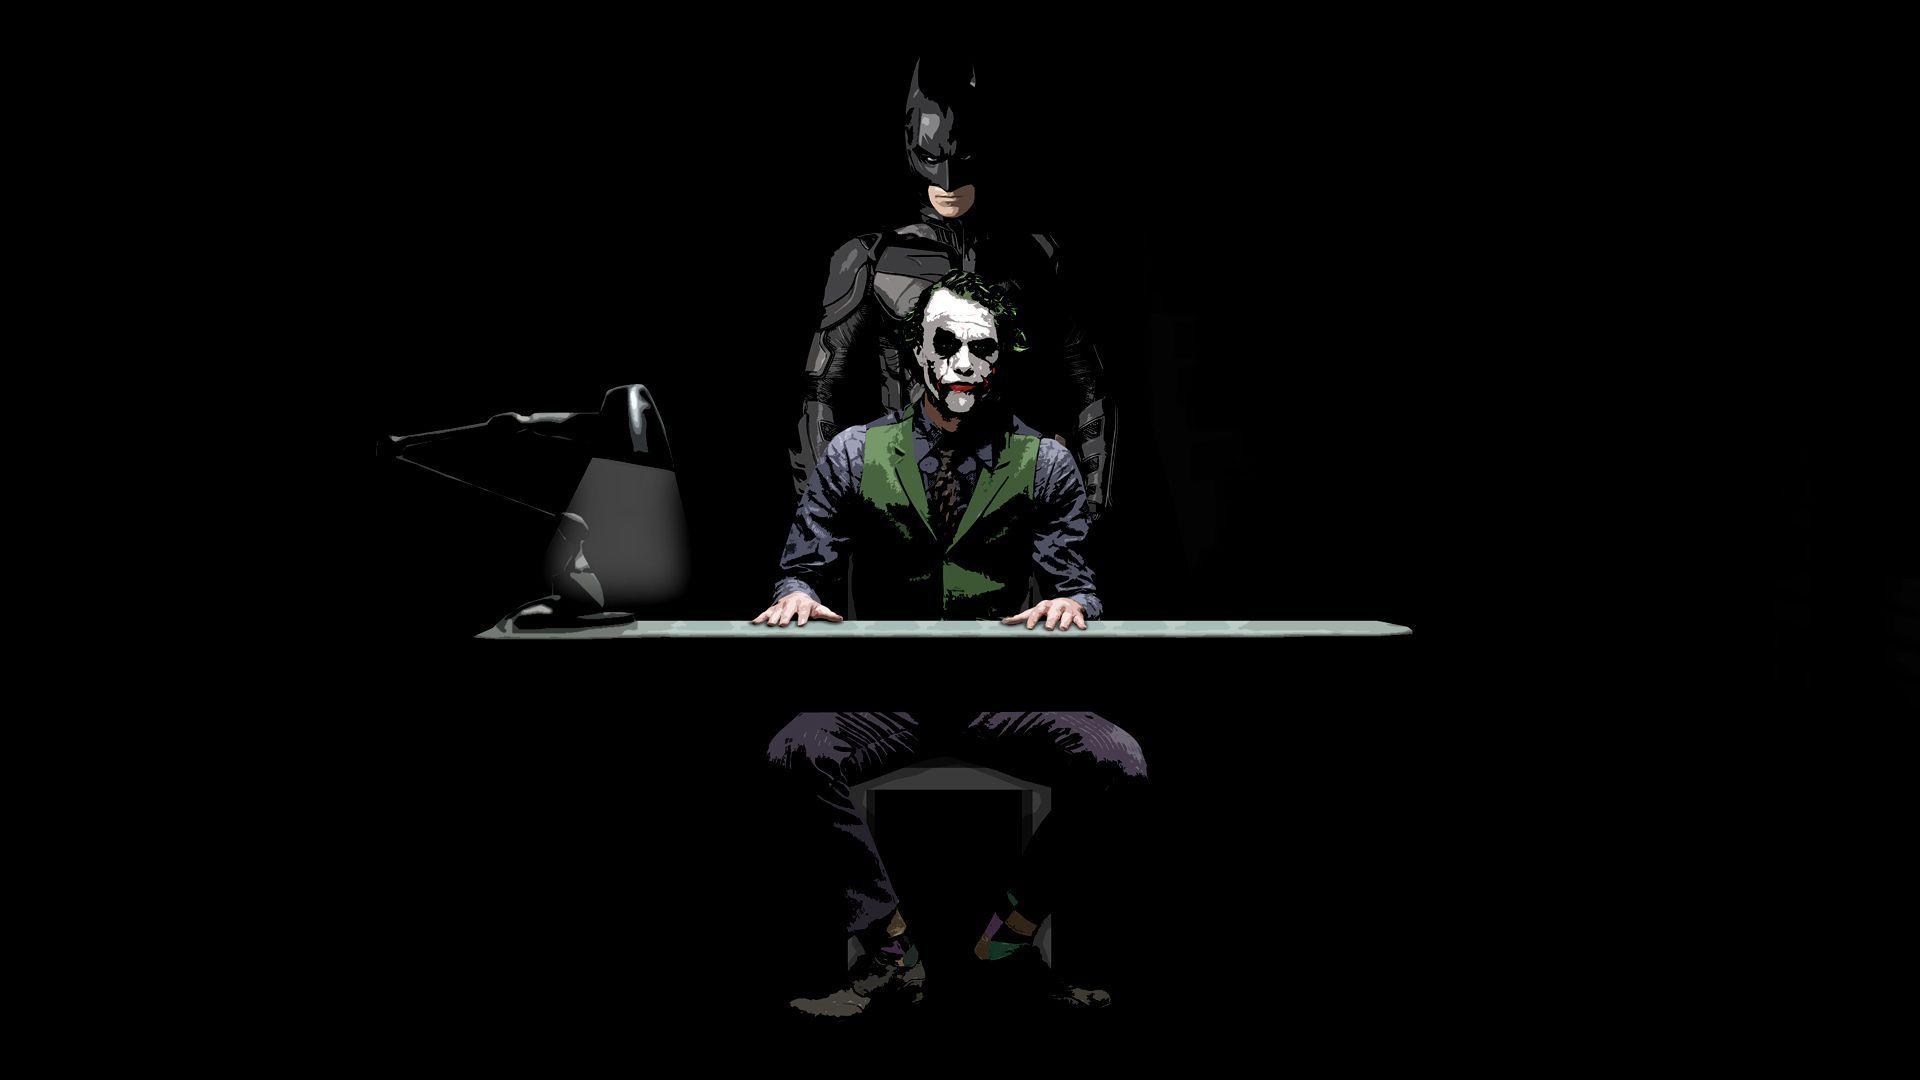  Epic  Joker  Wallpapers  Top Free Epic  Joker  Backgrounds  